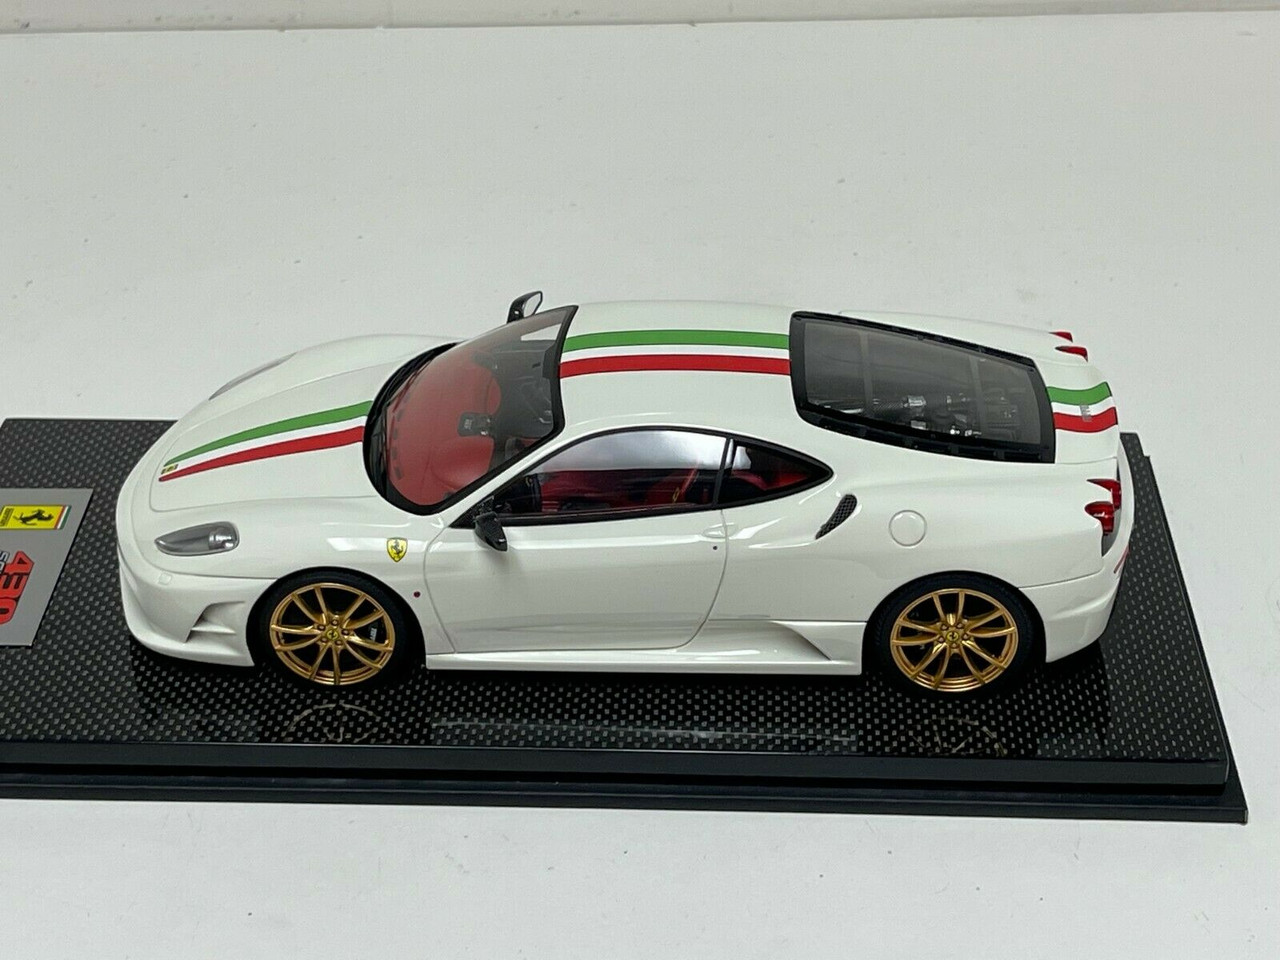 1/18 Looksmart Ferrari F430 Scuderia Avus White Italian Stripe Gold Wheels Resin Car Model